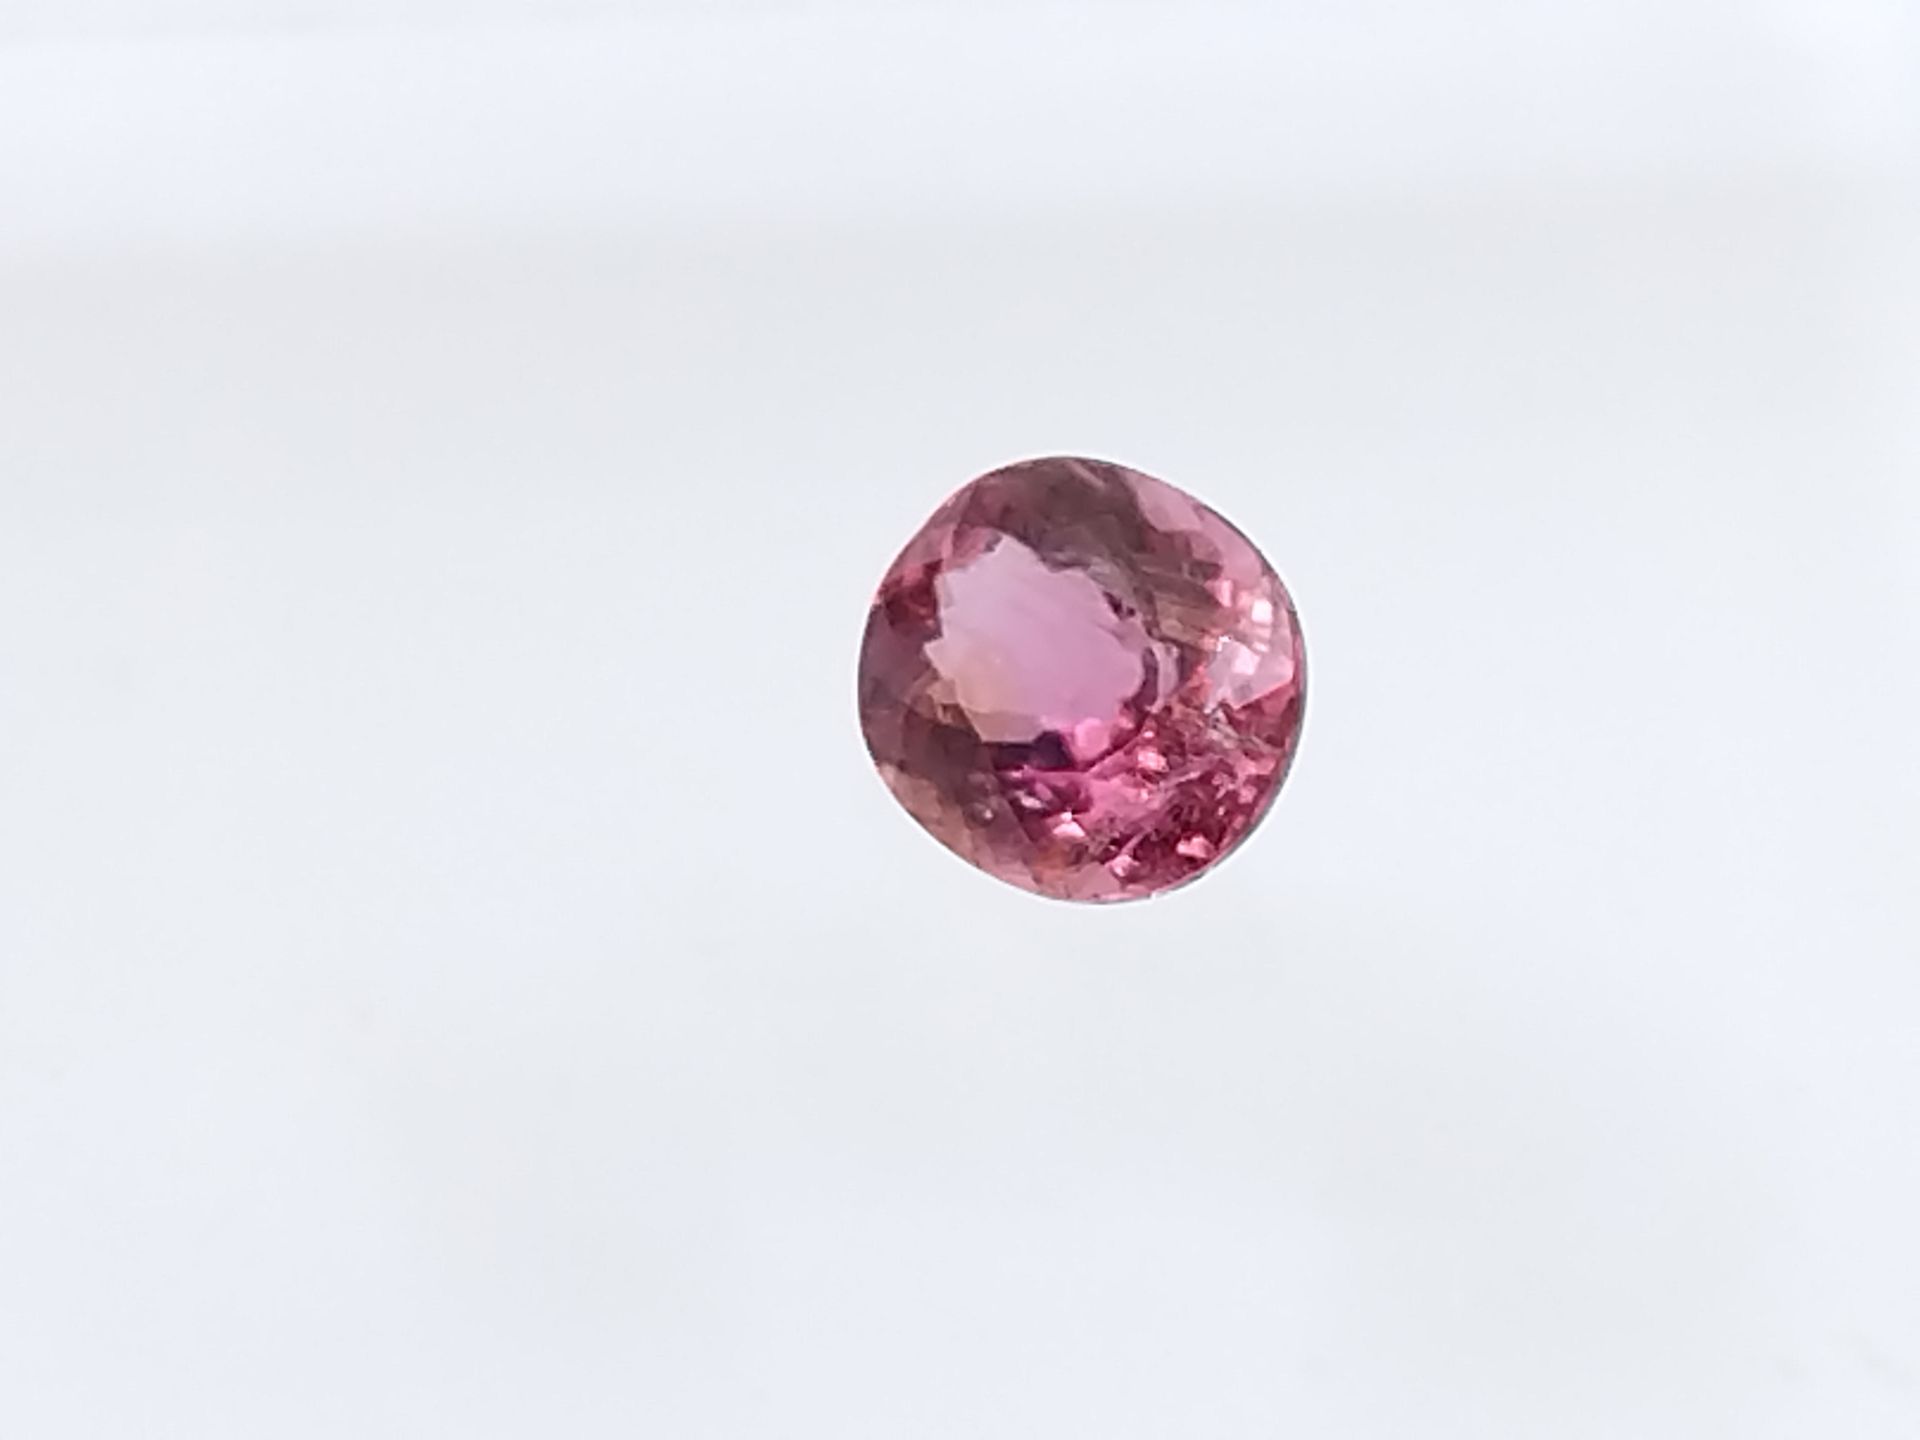 Null TURMALINO rosa, ovale, Mozambico, 1,15 carati Dim : 7 x 6,3